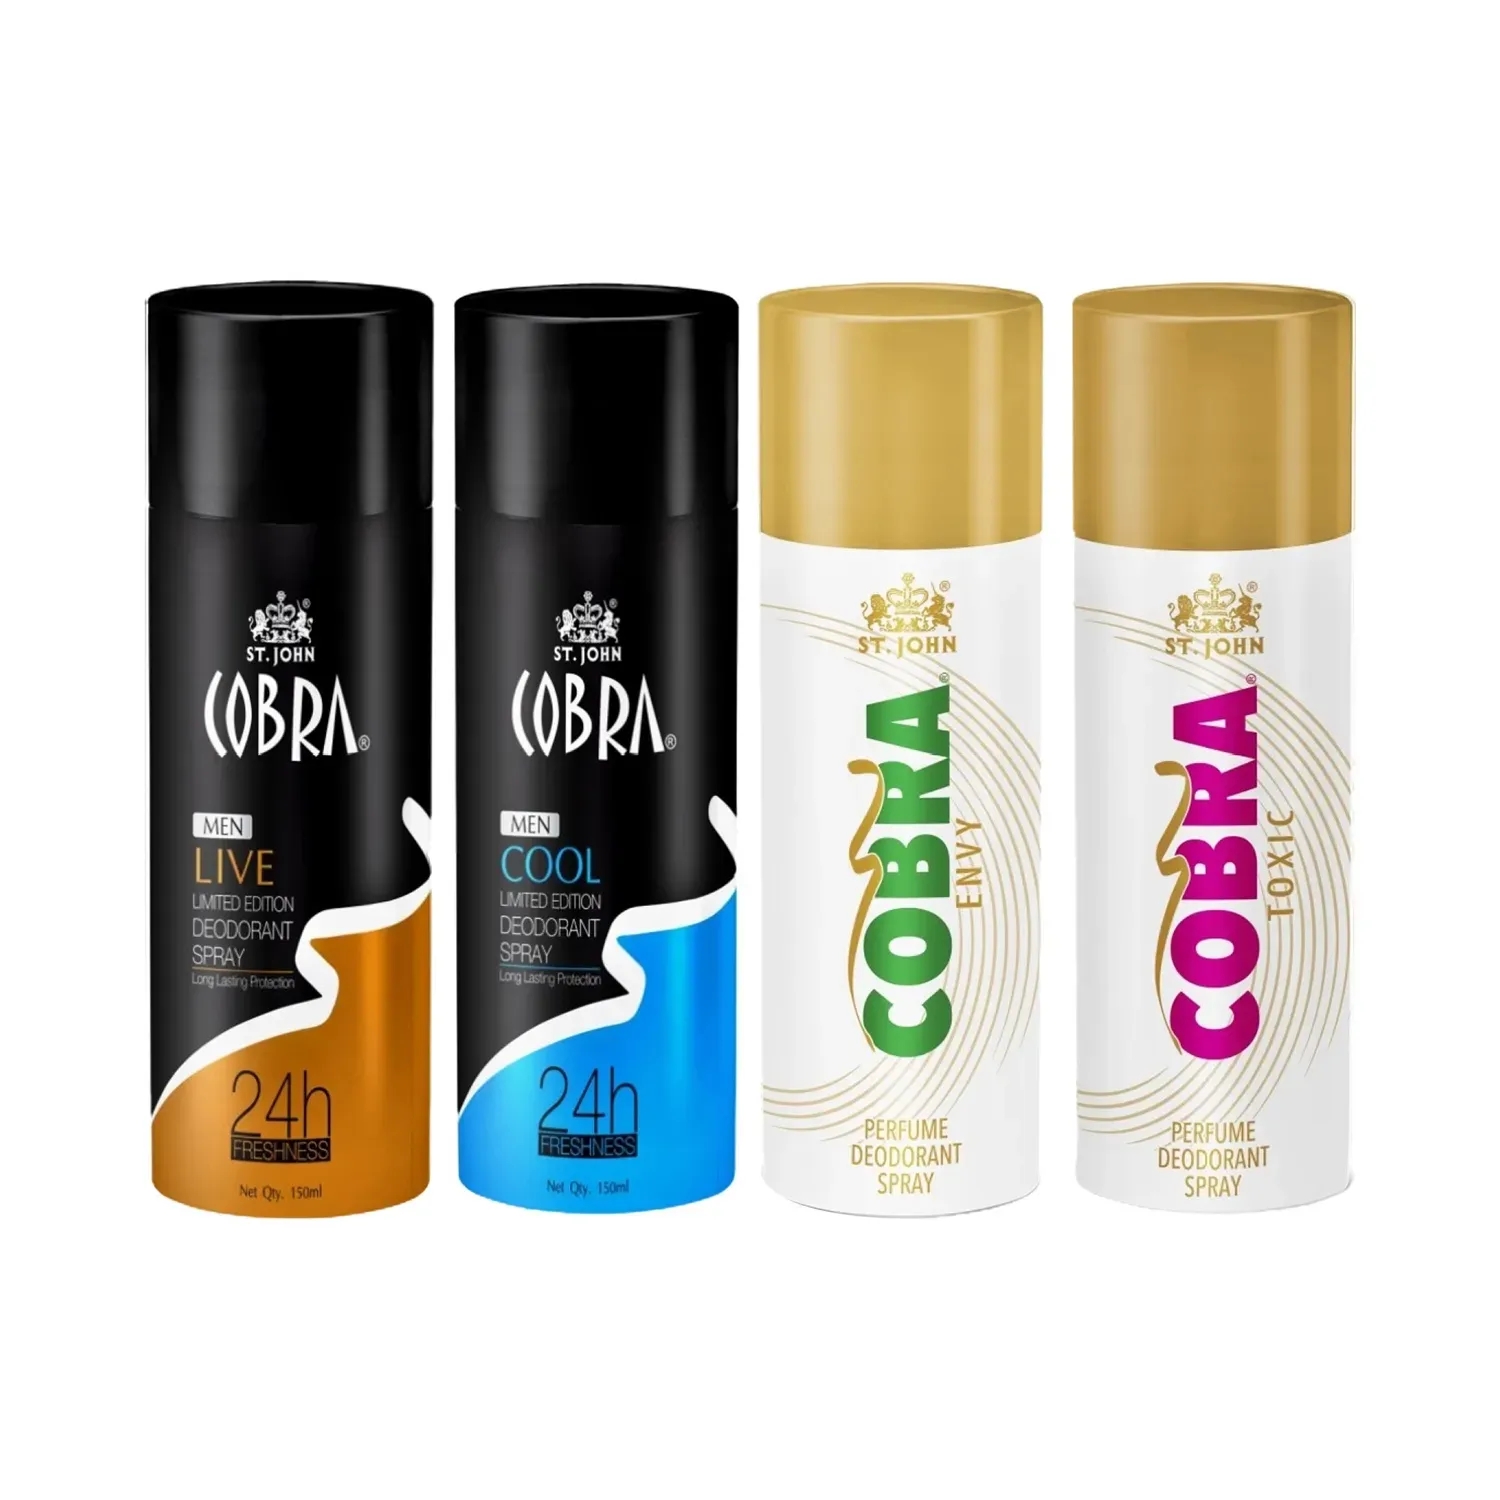 ST.JOHN Cobra Live, Cool, Envy & Toxic Deodorant Spray (4 Pcs)